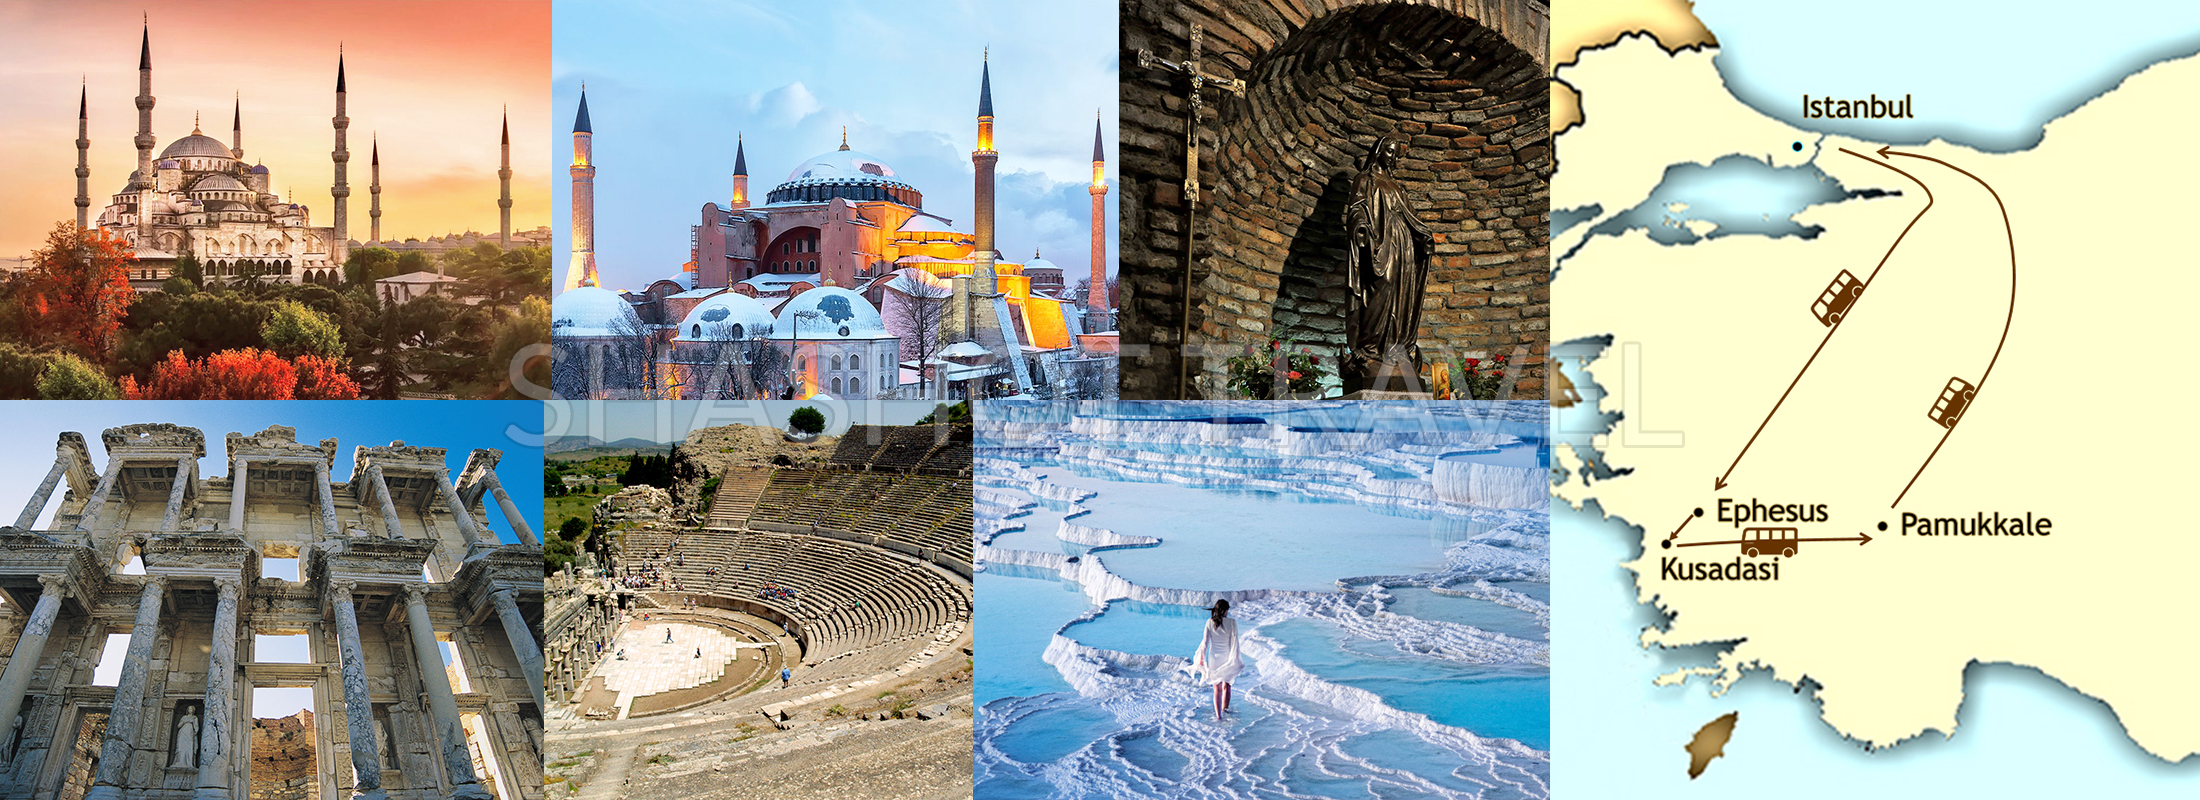 5-DAYS-TURKEY-PACKAGE-TOUR-ISTANBUL-EPHESUS-PAMUKKALE-by-bus-shashot-travel-turkiye